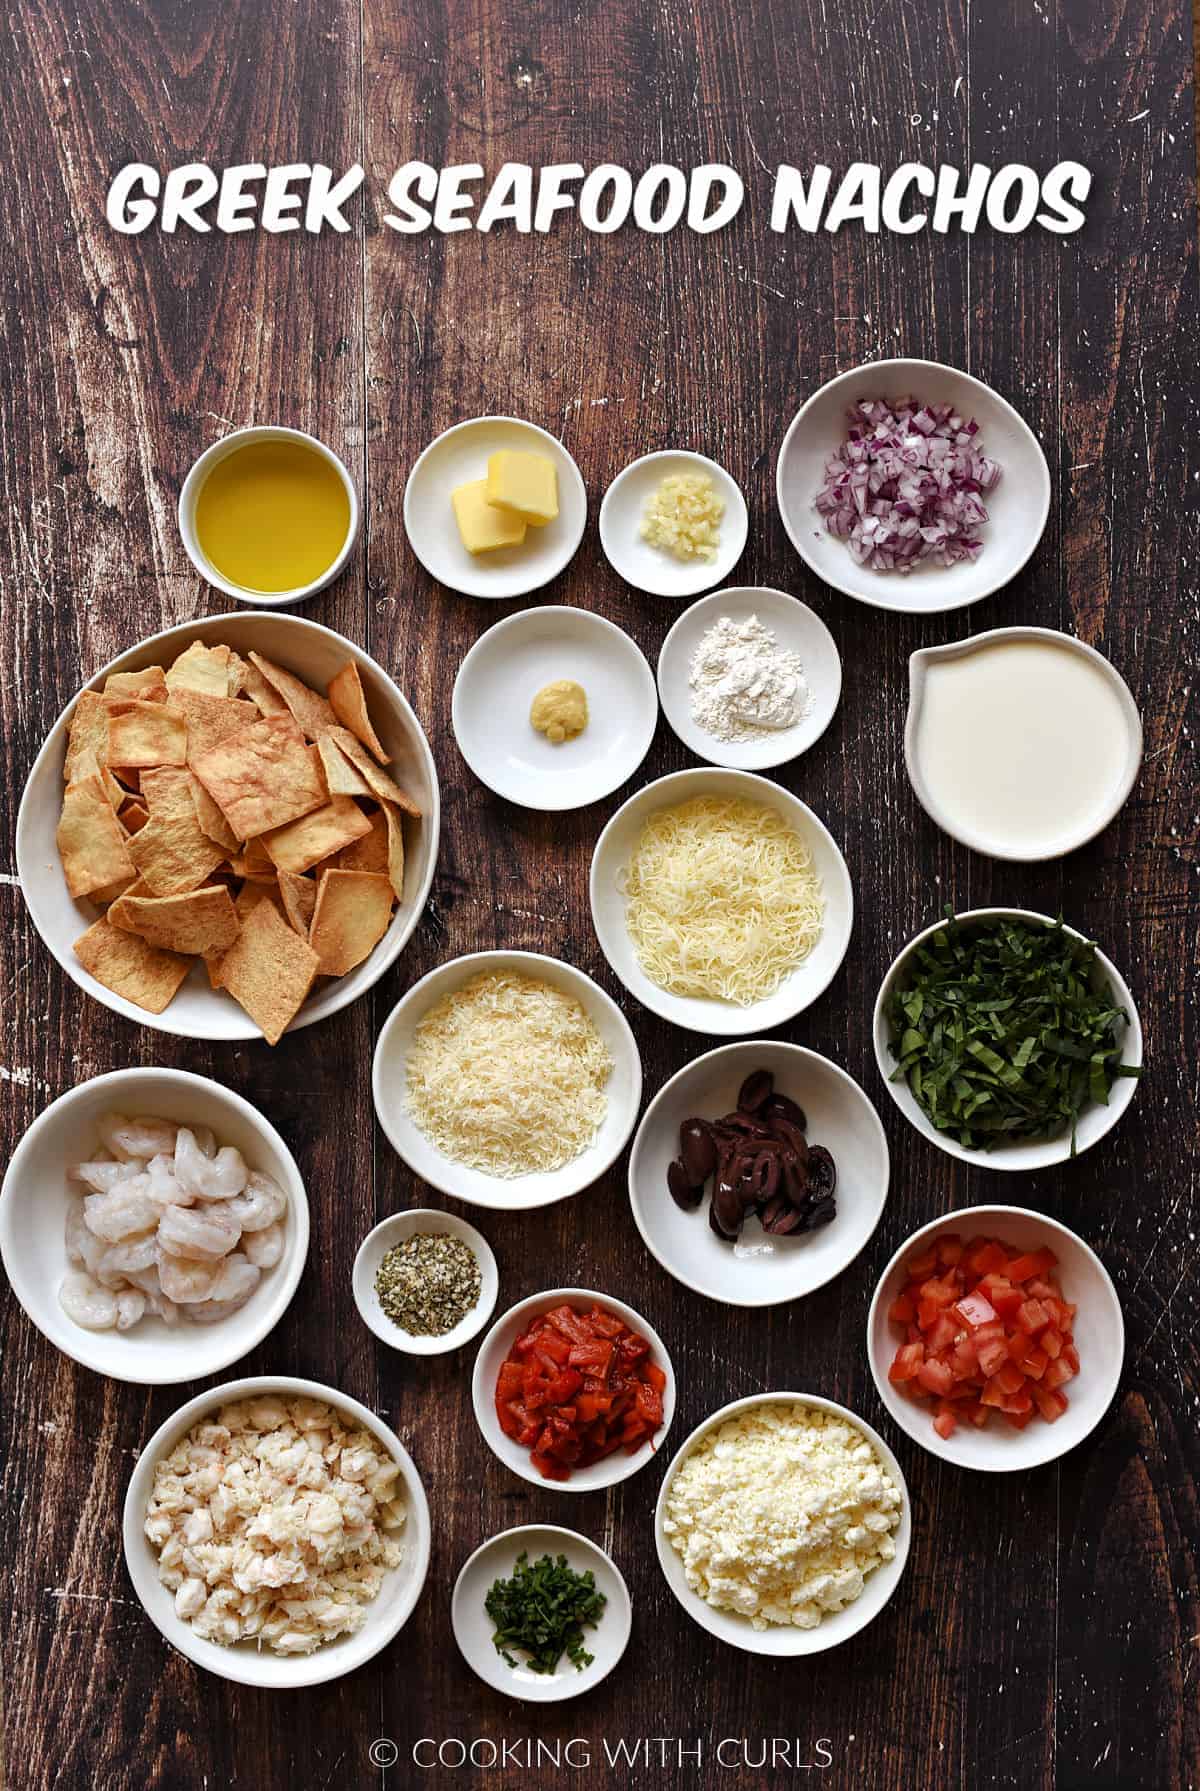 Ingredients to make Greek seafood nachos in small bowls.